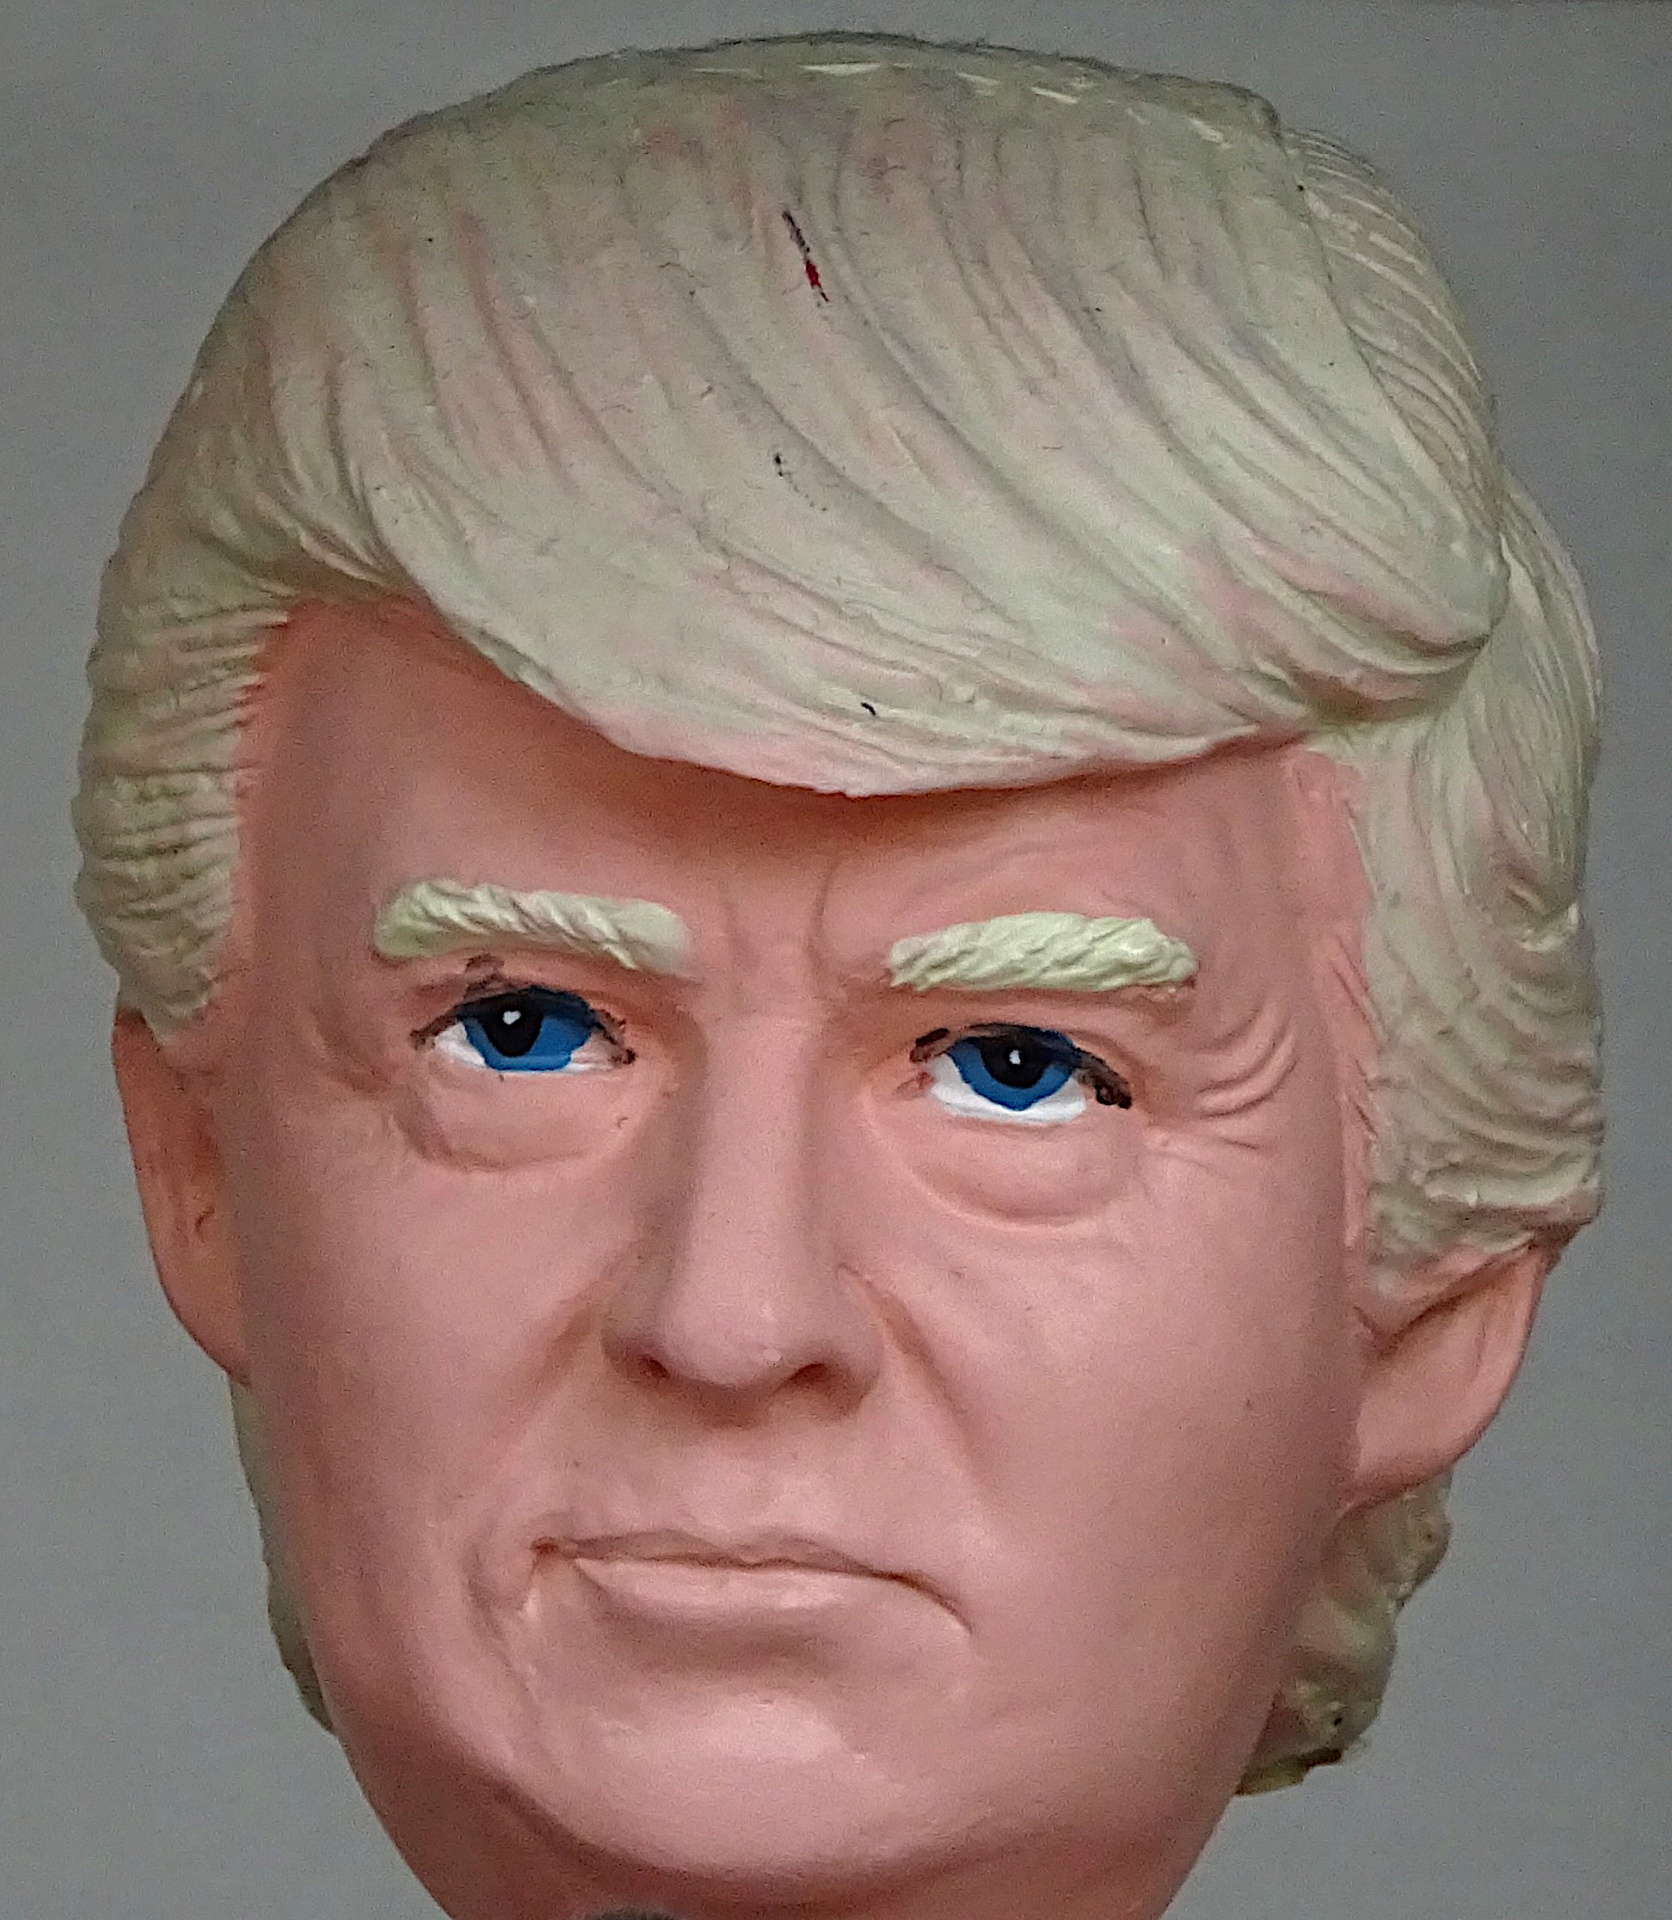 Model Face Of President Trump